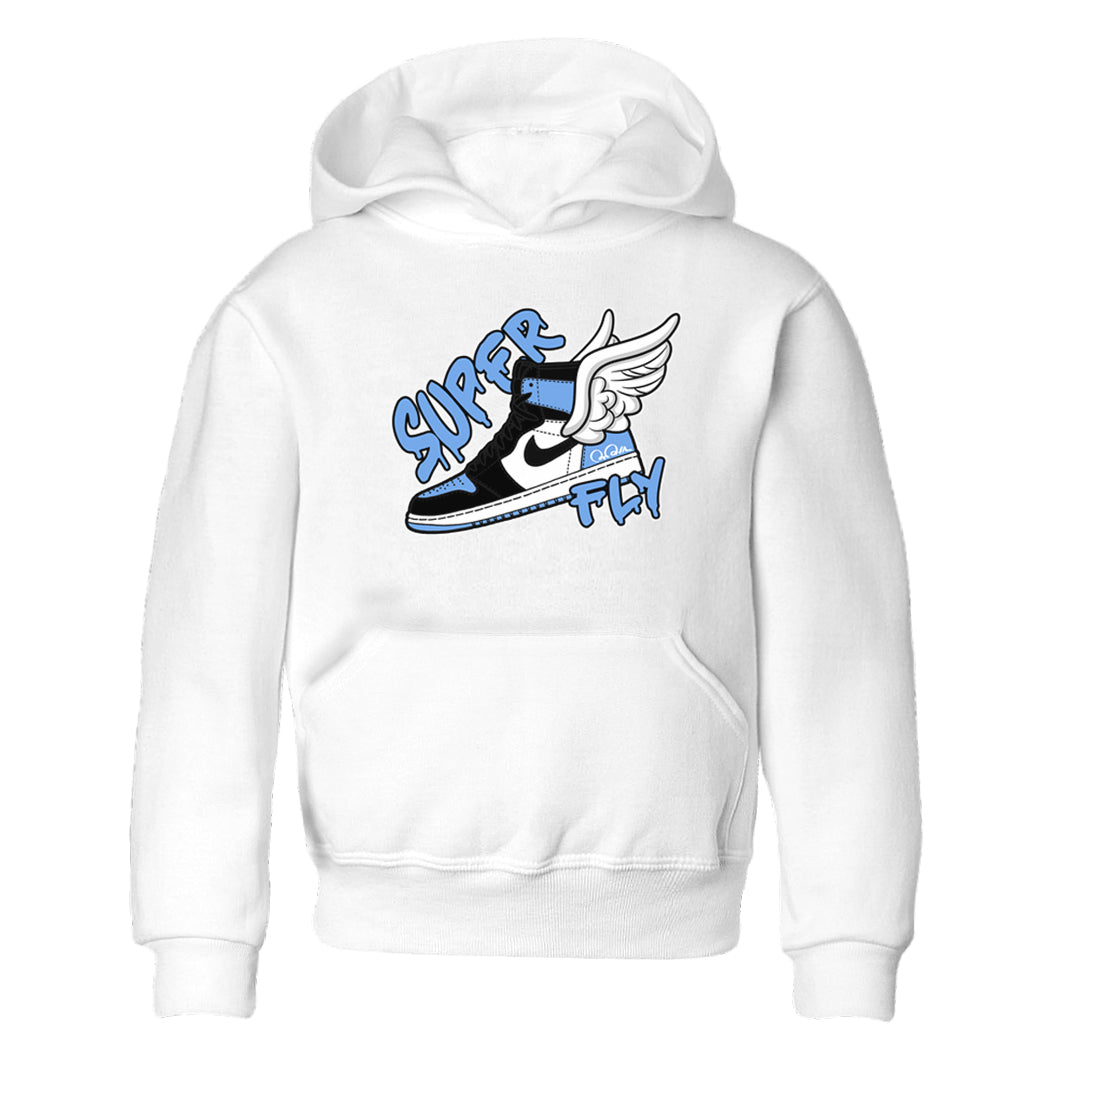 Air Jordan 1 University Blue Sneaker Match Tees Super Fly Sneaker Tees AJ1 University Blue Sneaker Release Tees Kids Shirts White 2